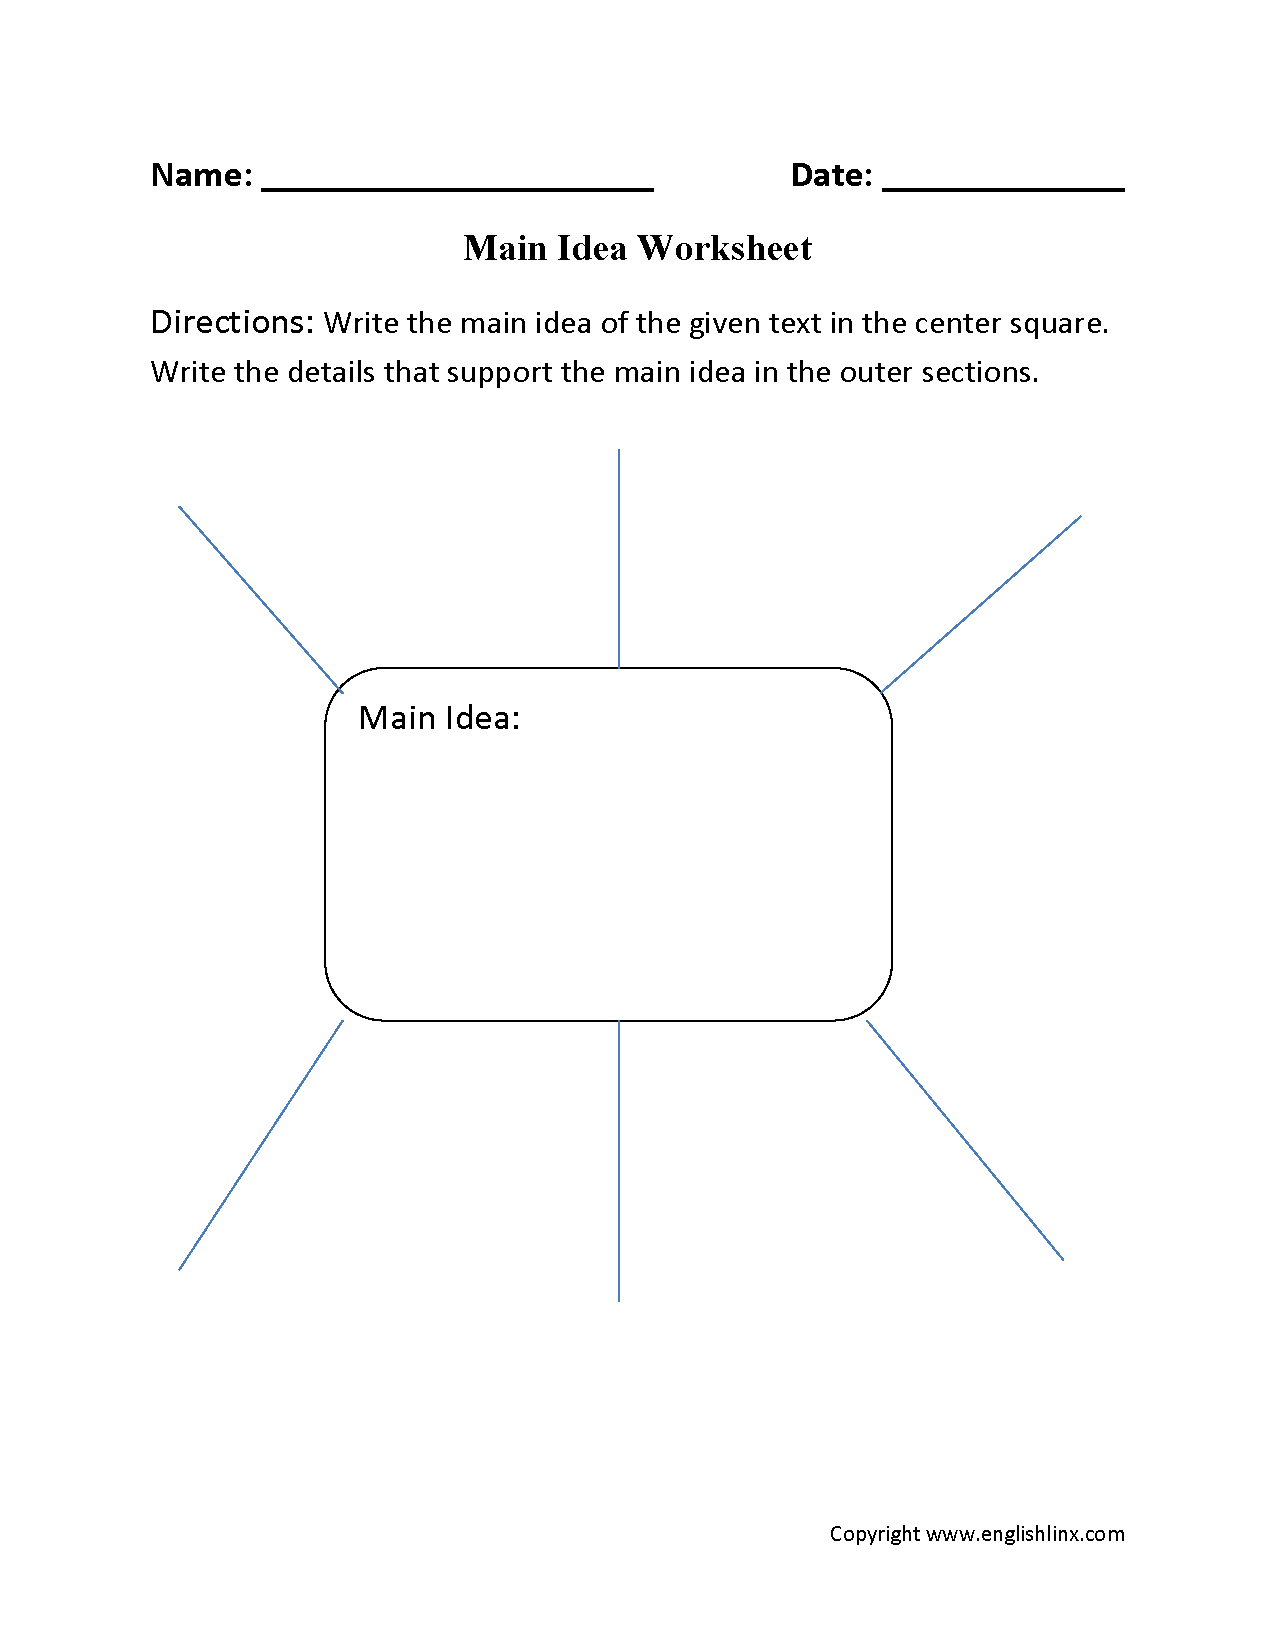 Main Idea Worksheet